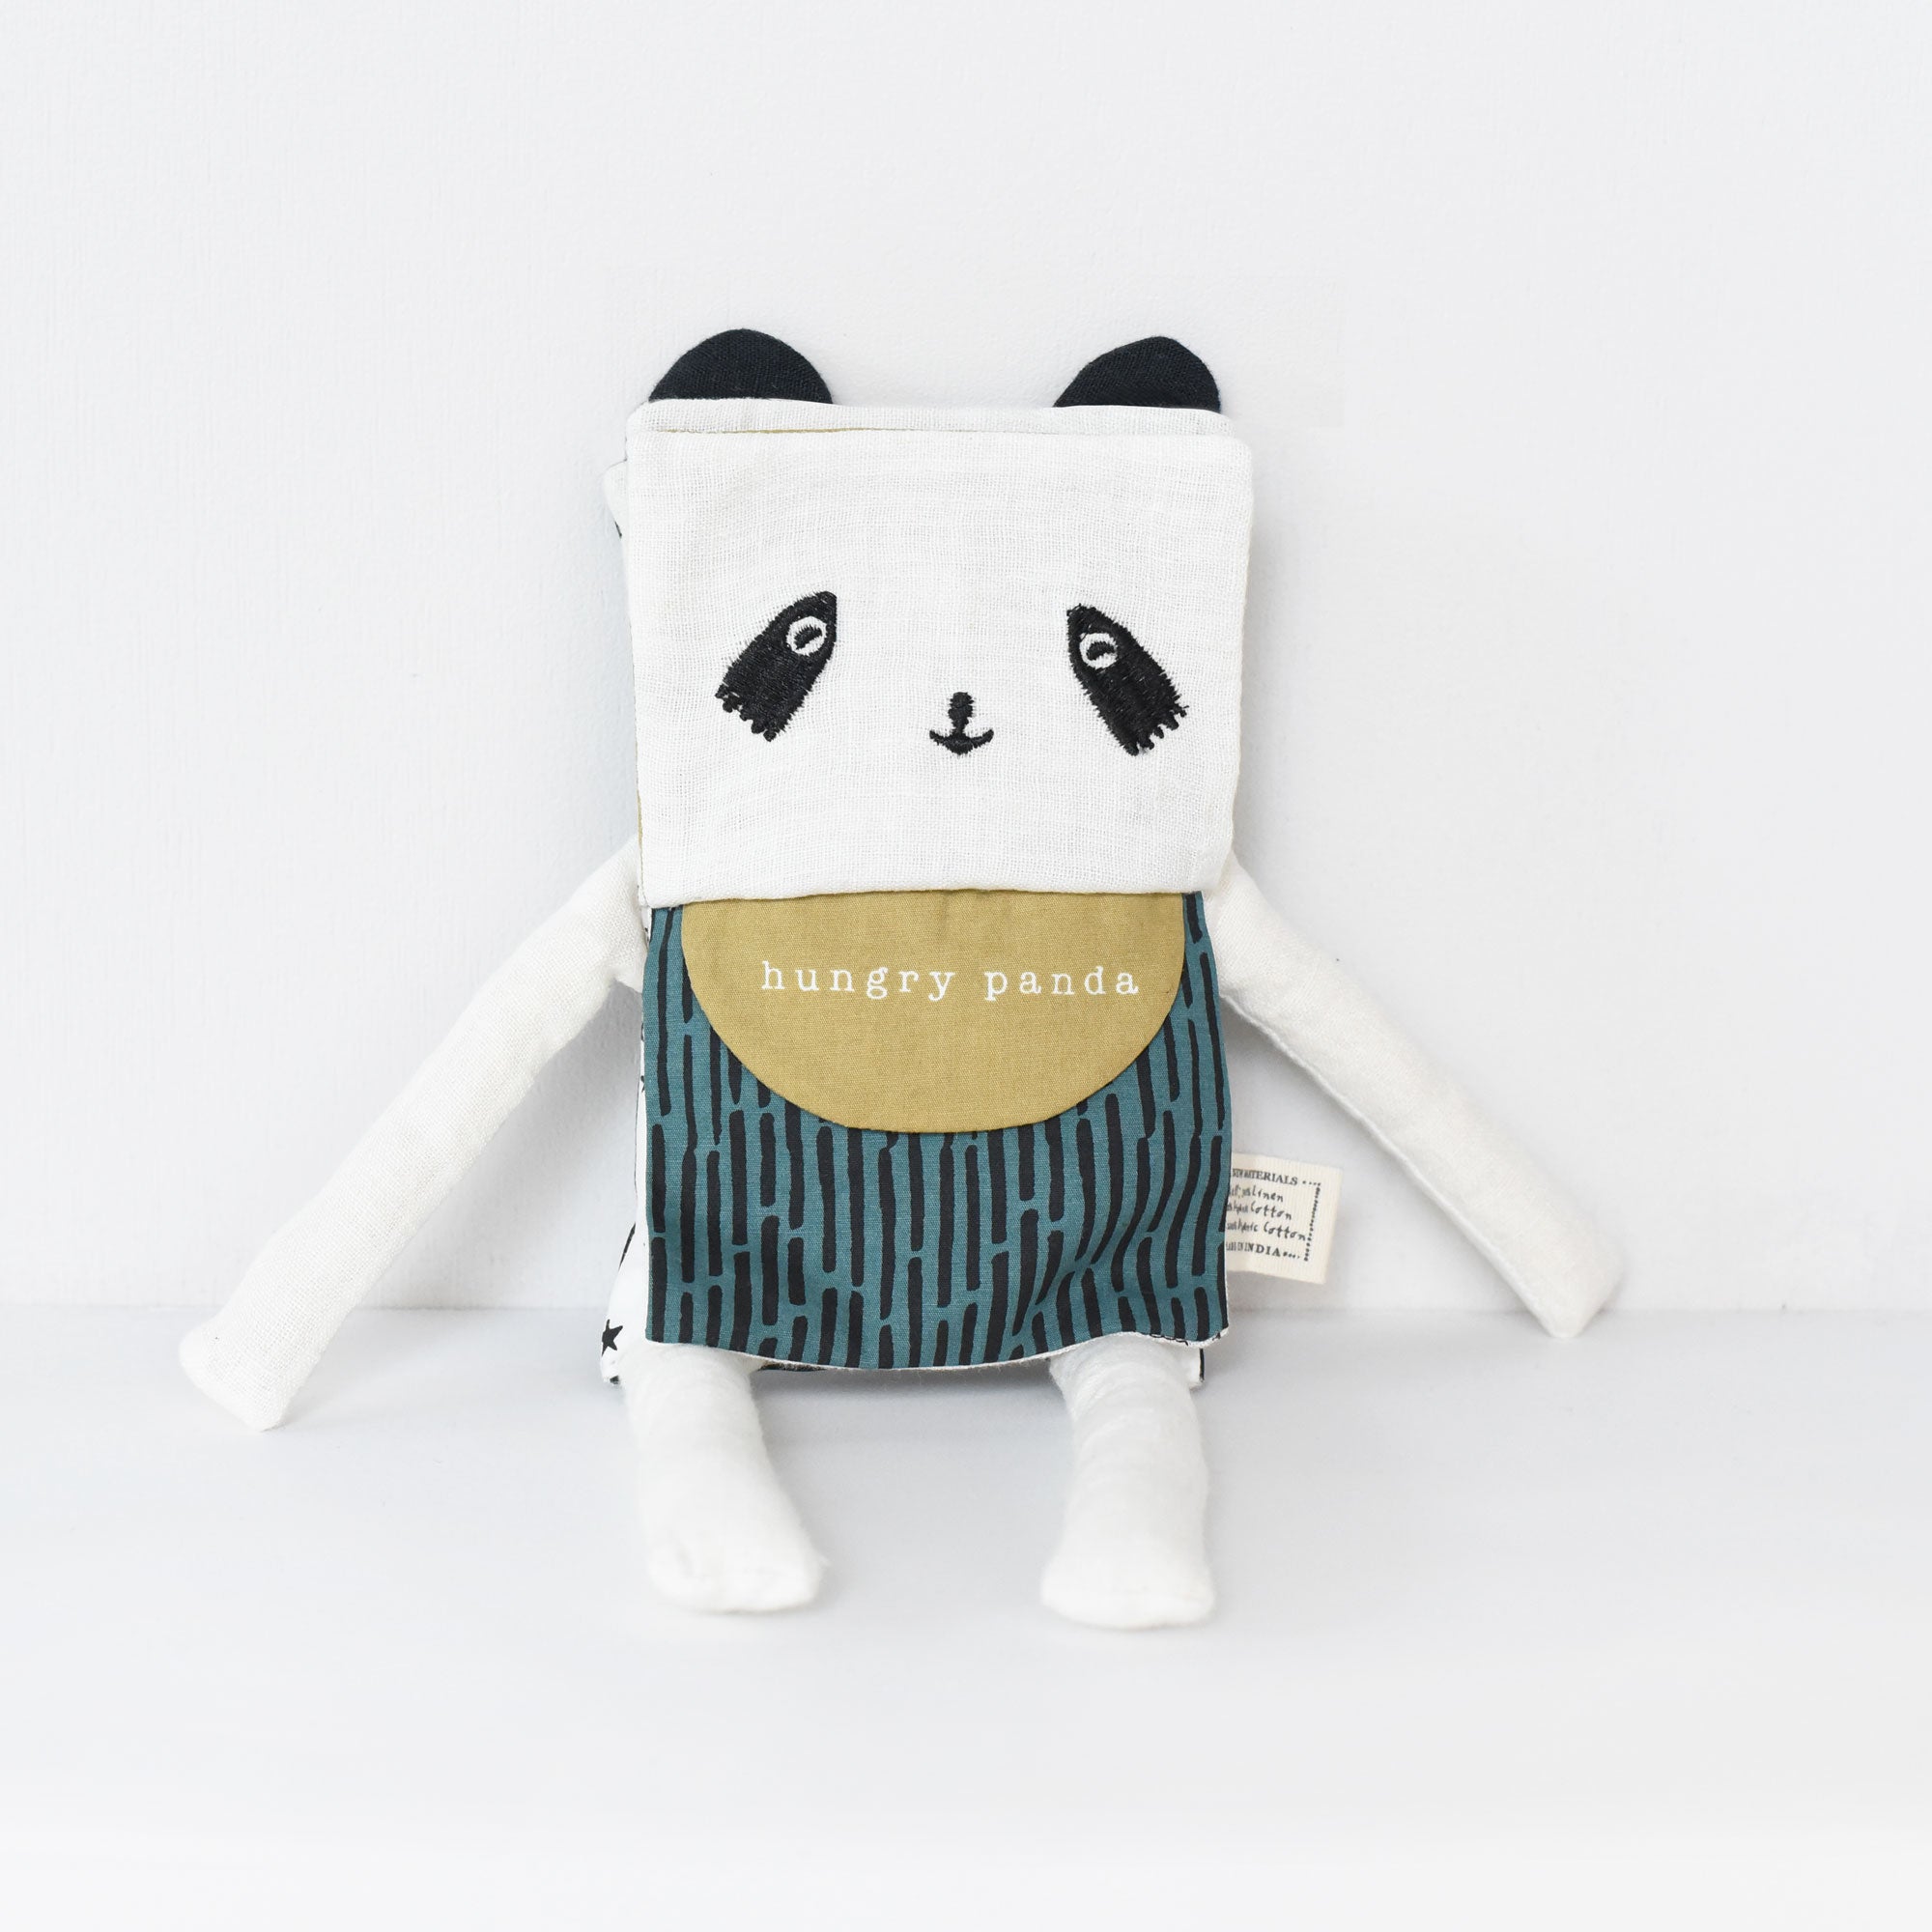 Wee Gallery Organic Panda Flippy Friend - English Edition